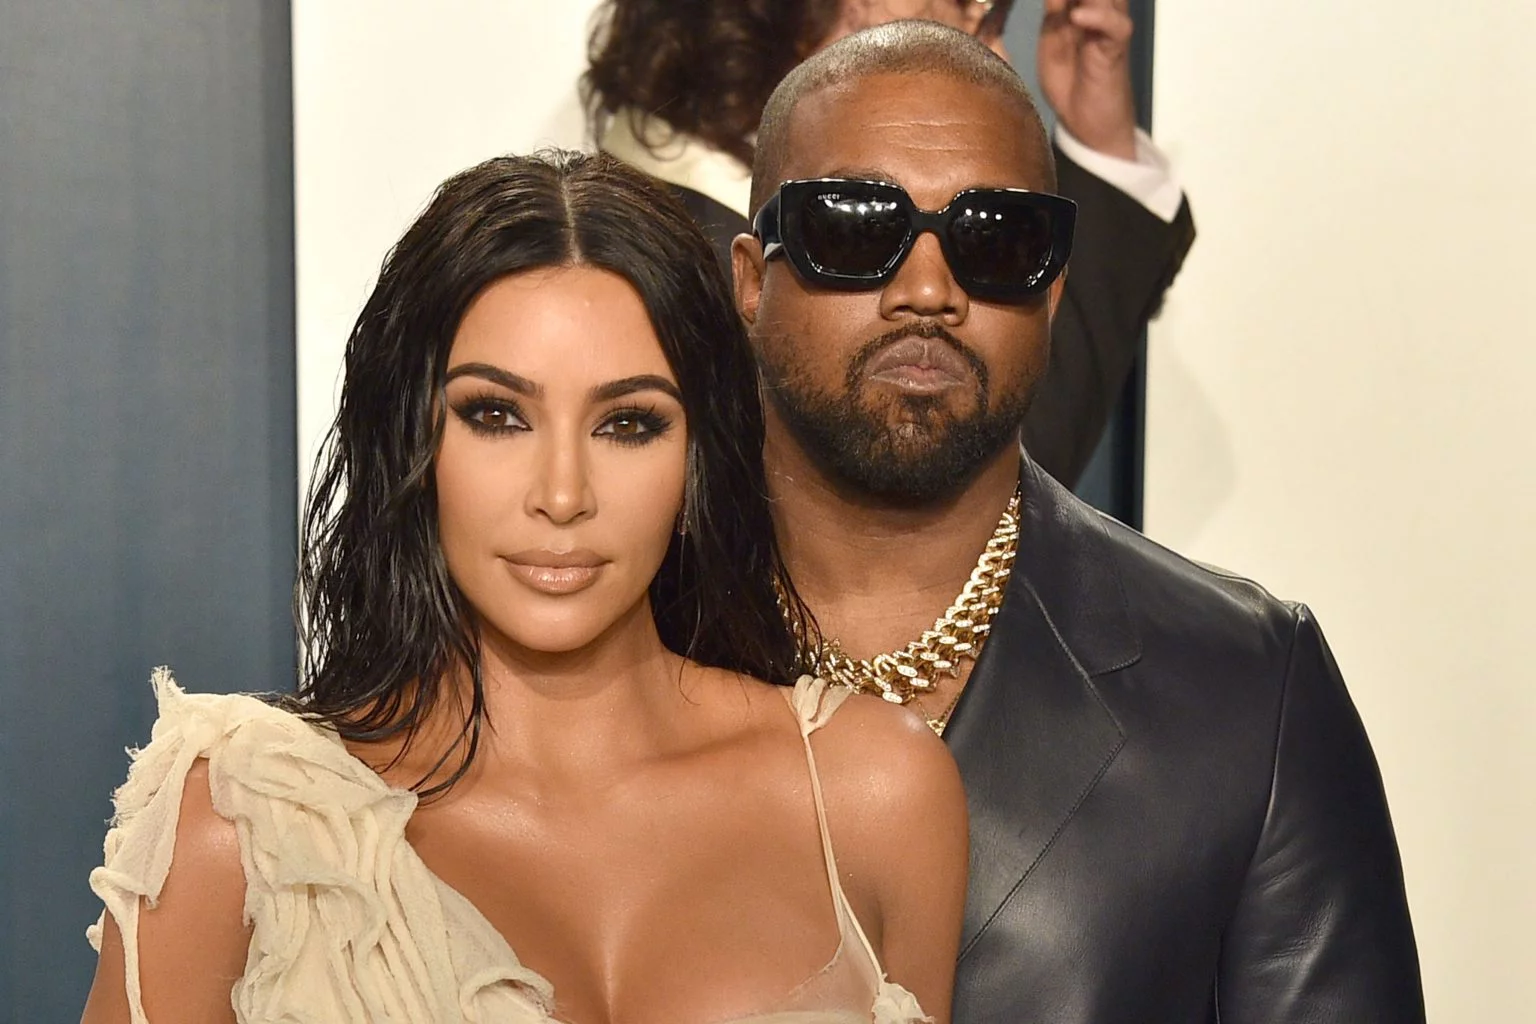 Why I divorced Kanye West – Kim Kardashian